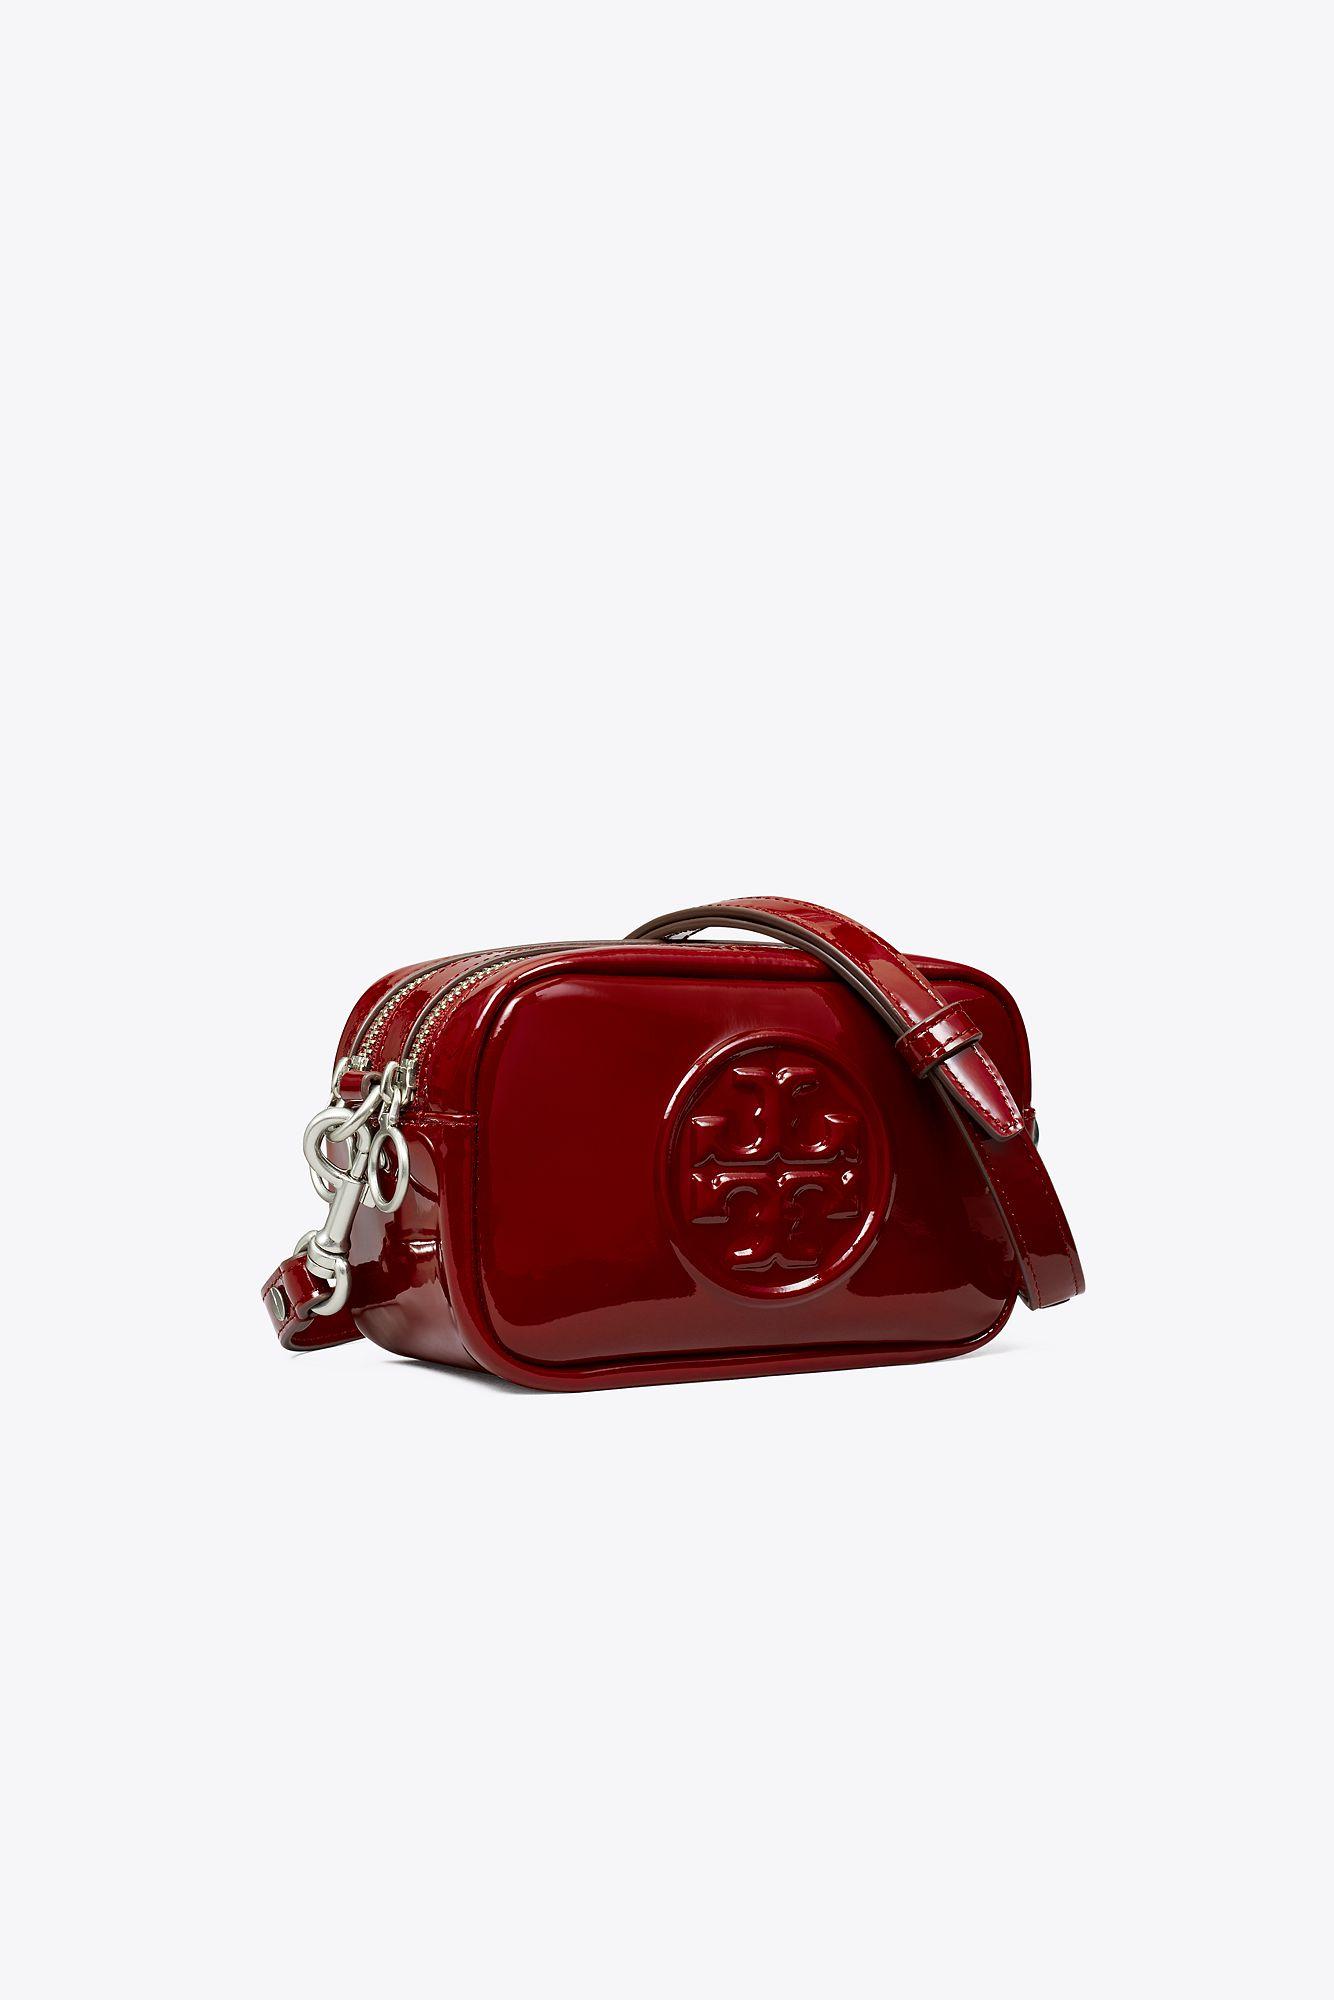 Tory Burch Perry Bombé Patent Mini Bag in Red | Lyst